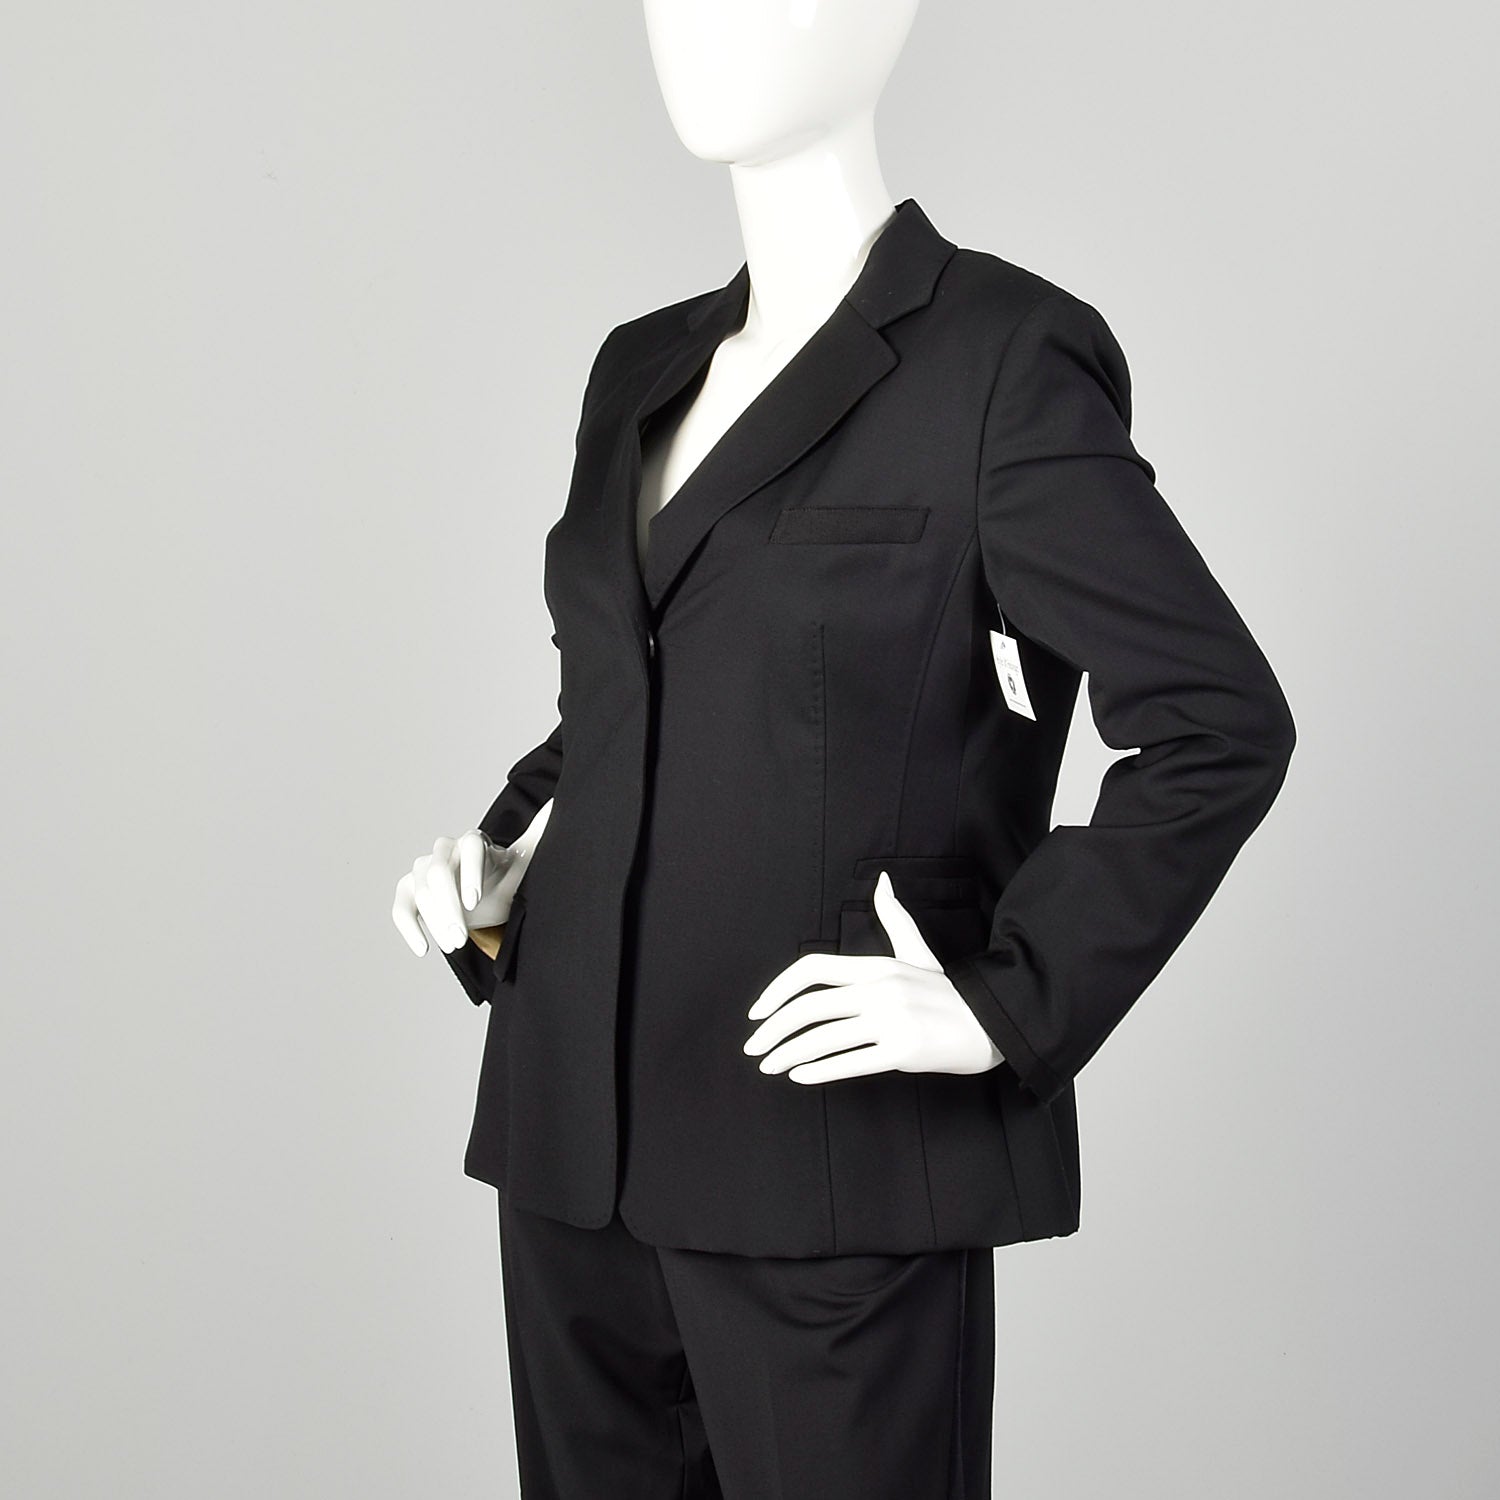 Medium 2000s Strenesse Tuxedo Hollywood Waist Trousers Black Satin Stripe Formal Suit